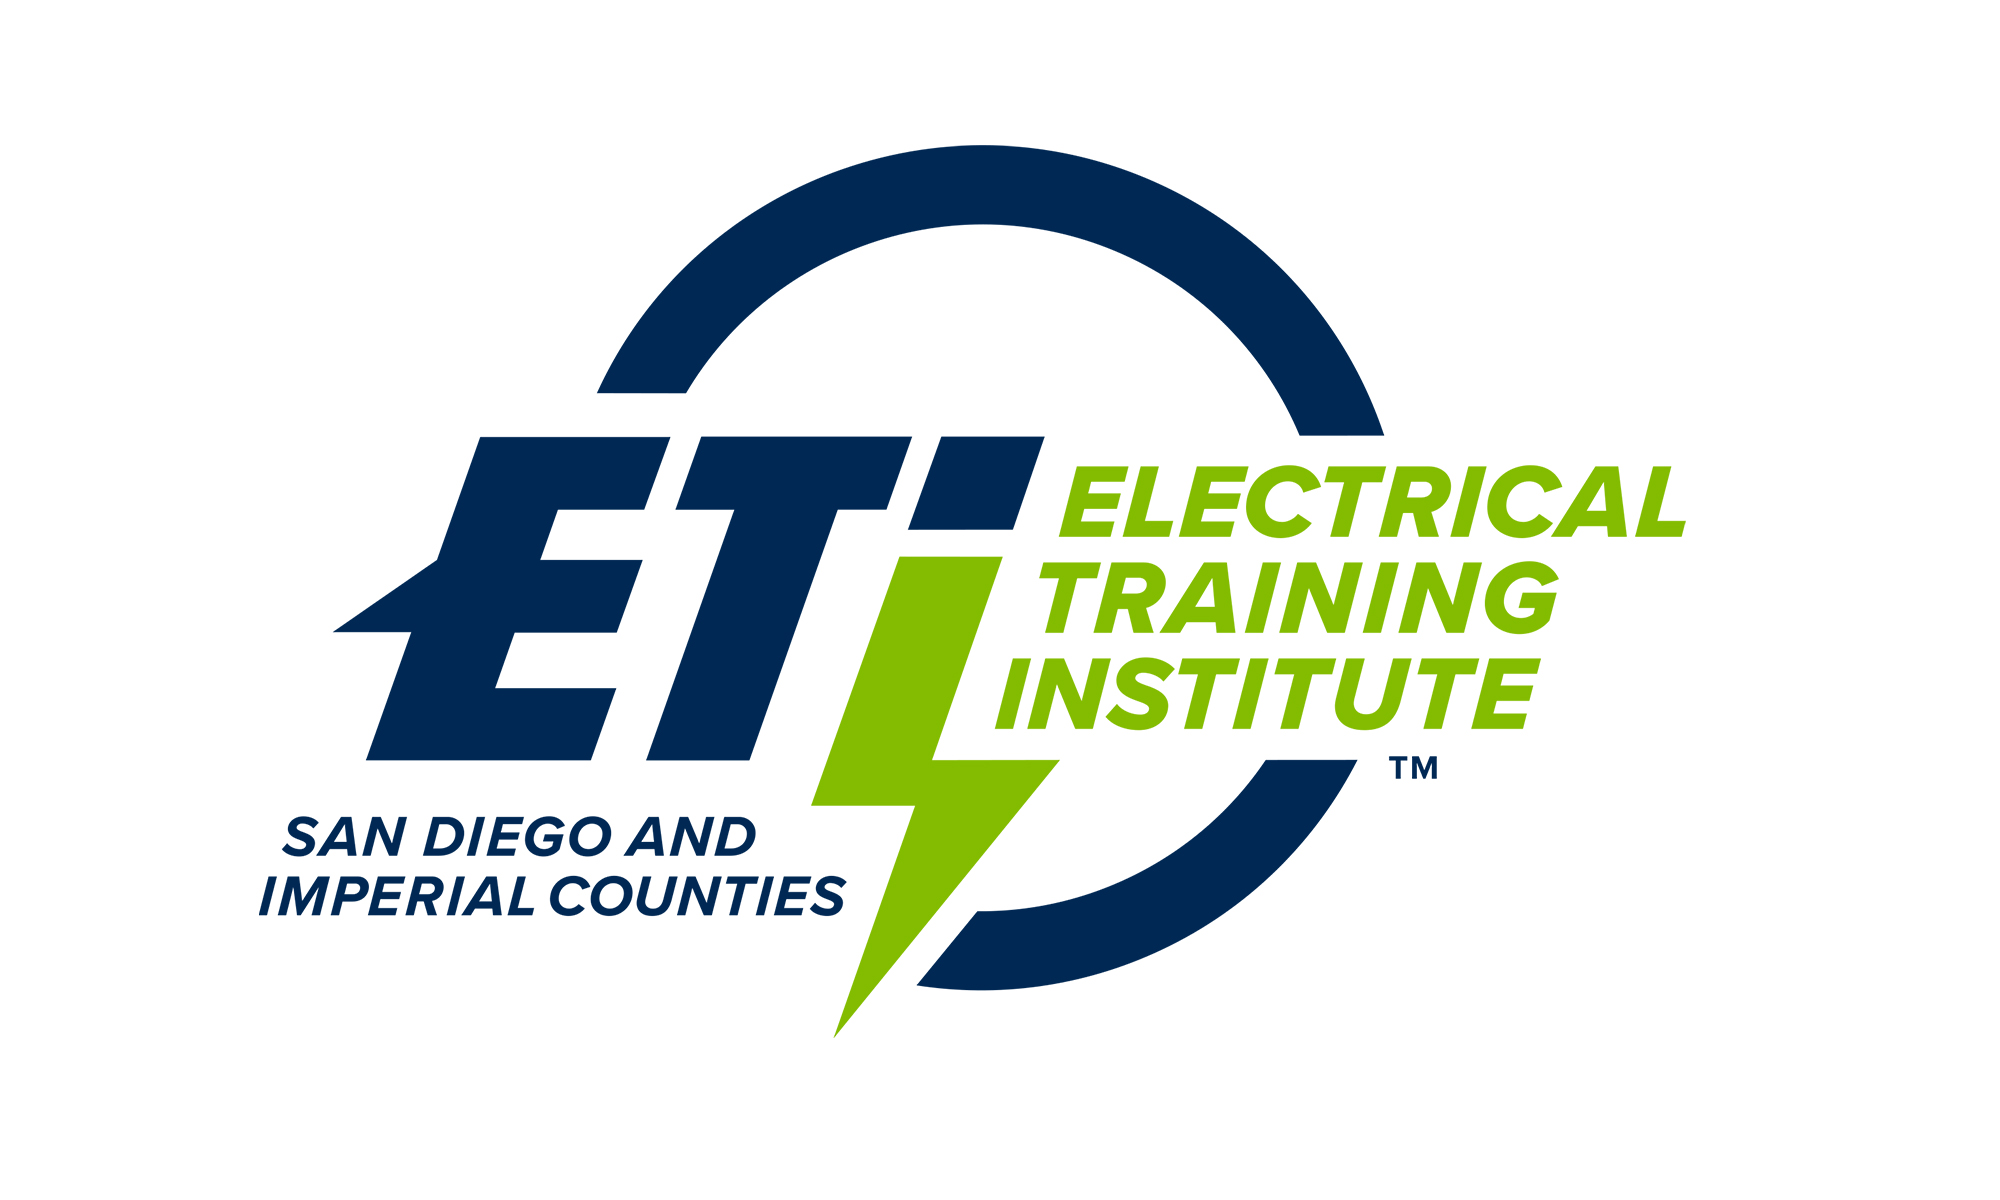 ETI logo front page